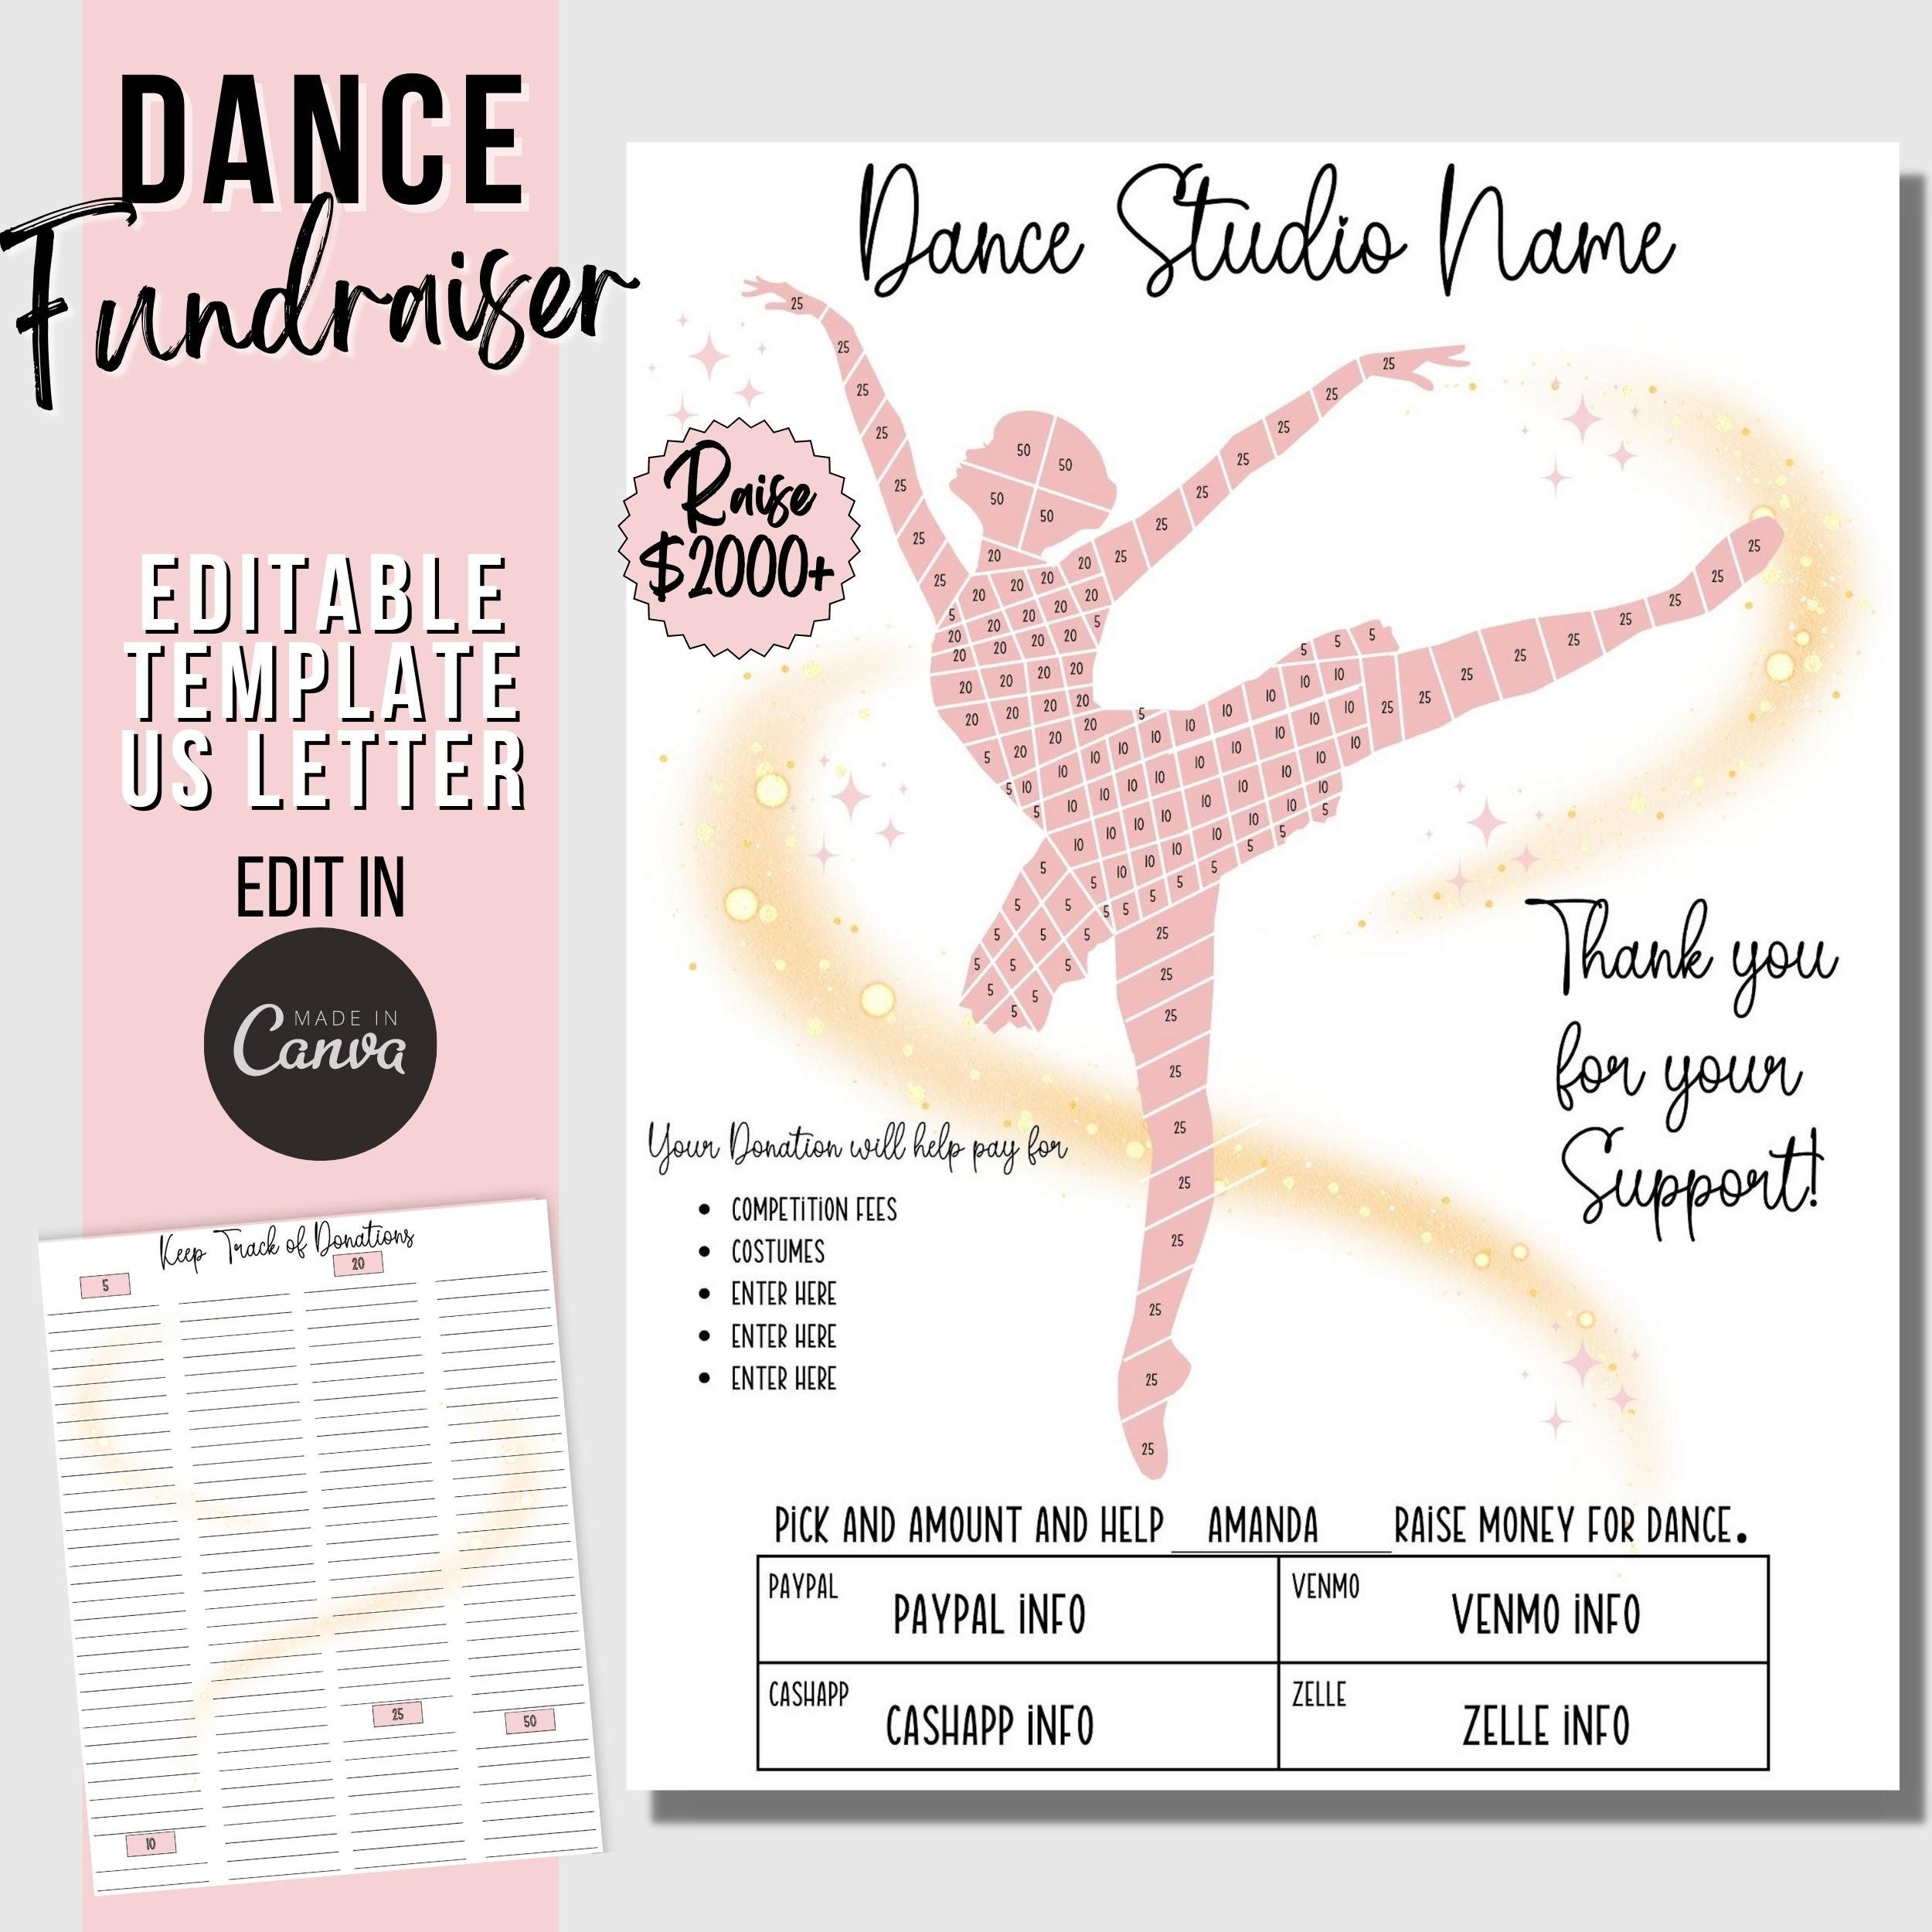 Dance Fundraiser Editable Canva Template Dance Team image picture